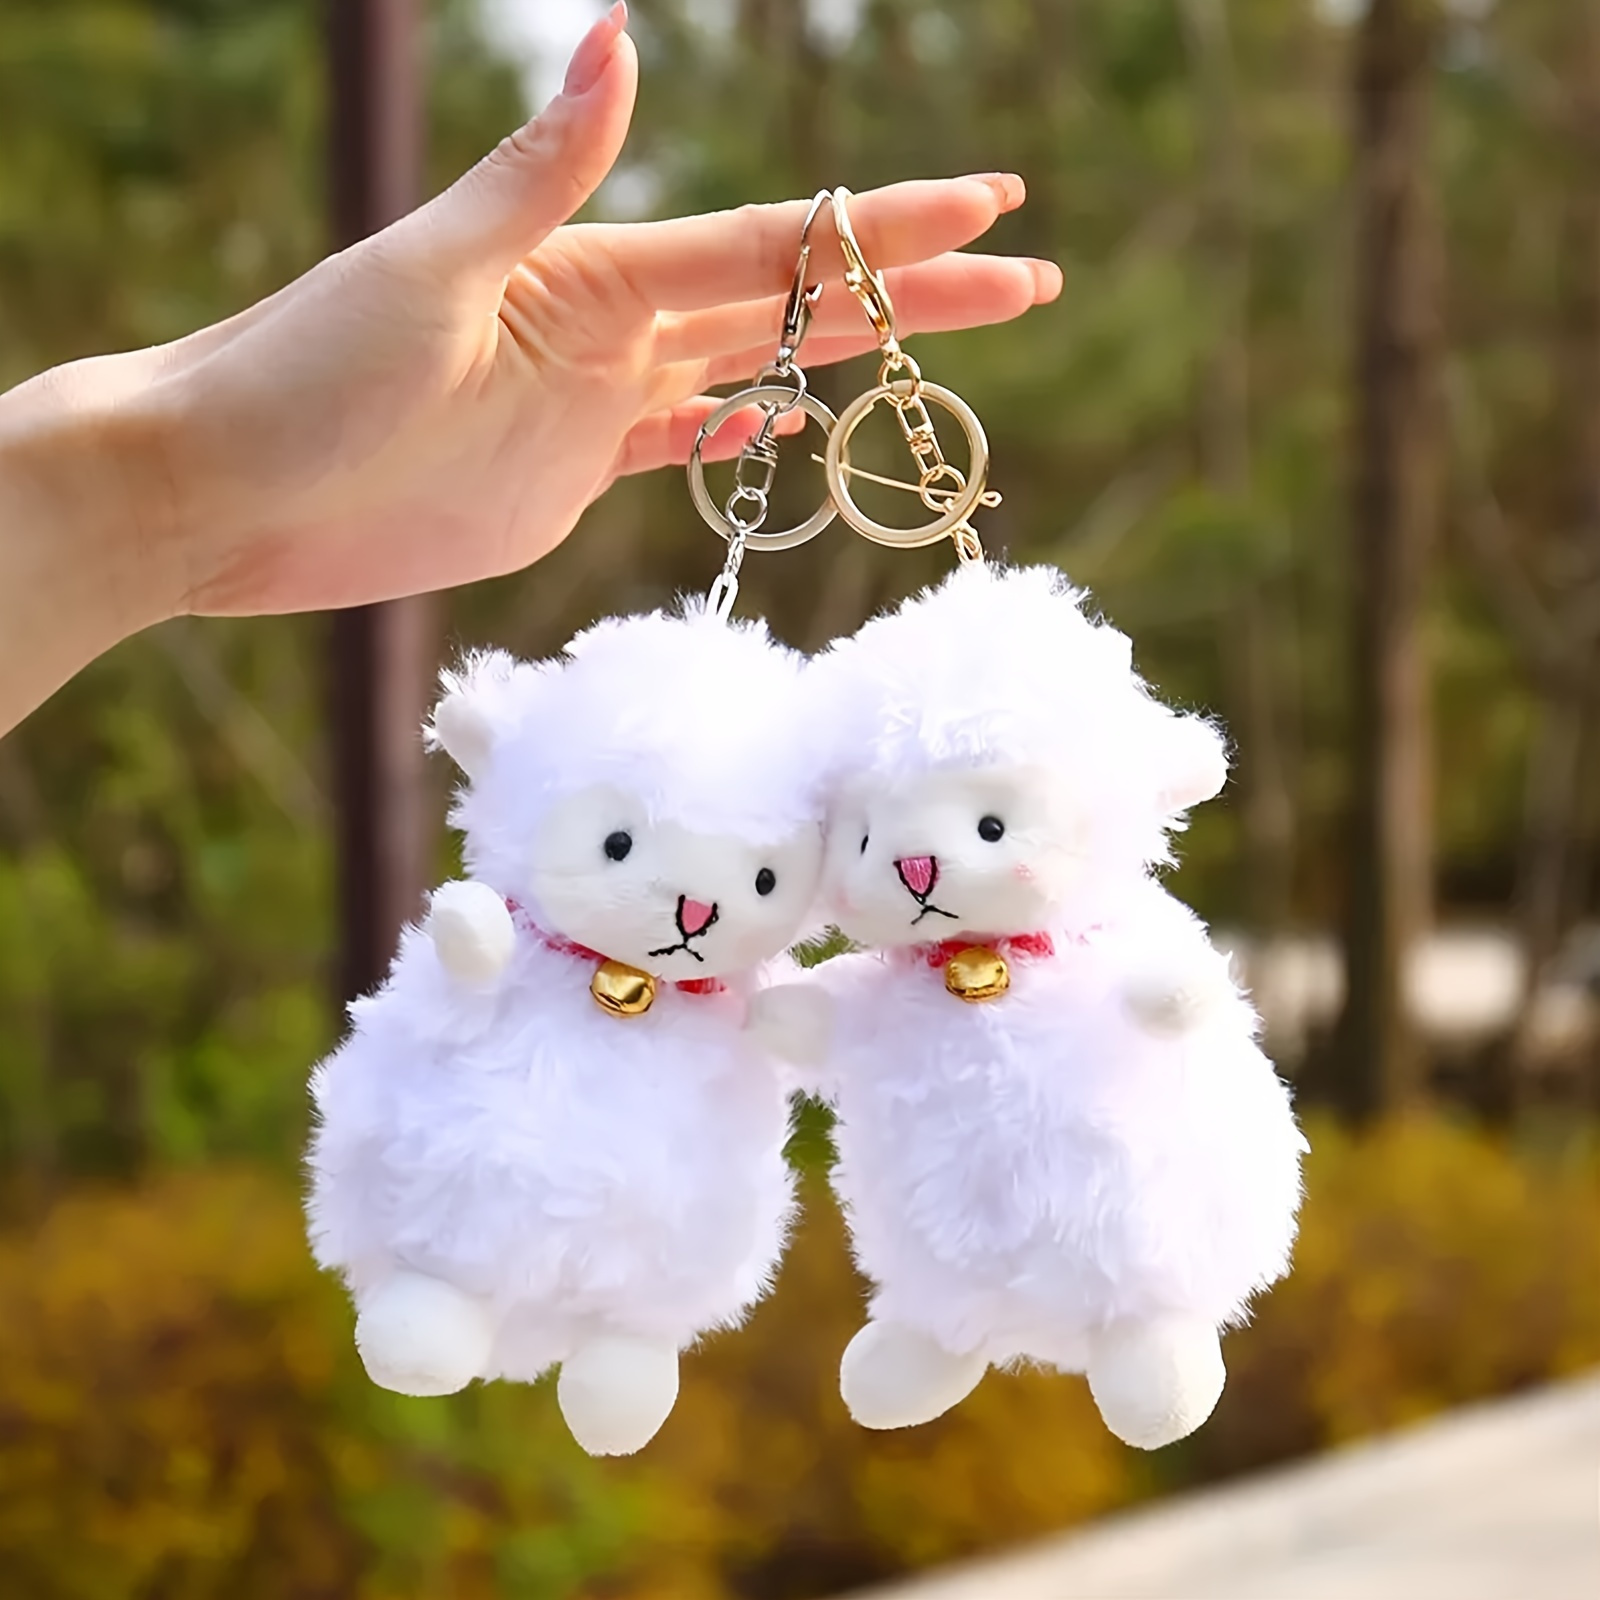 Shein 1pc Cute Toys Plush White Cloud Stuffed Animal Soft Keychain for Kids Bag, Cute Happy Cloud Keychain with Blushing Cheeks for Yoga Bag Decoration,12cm